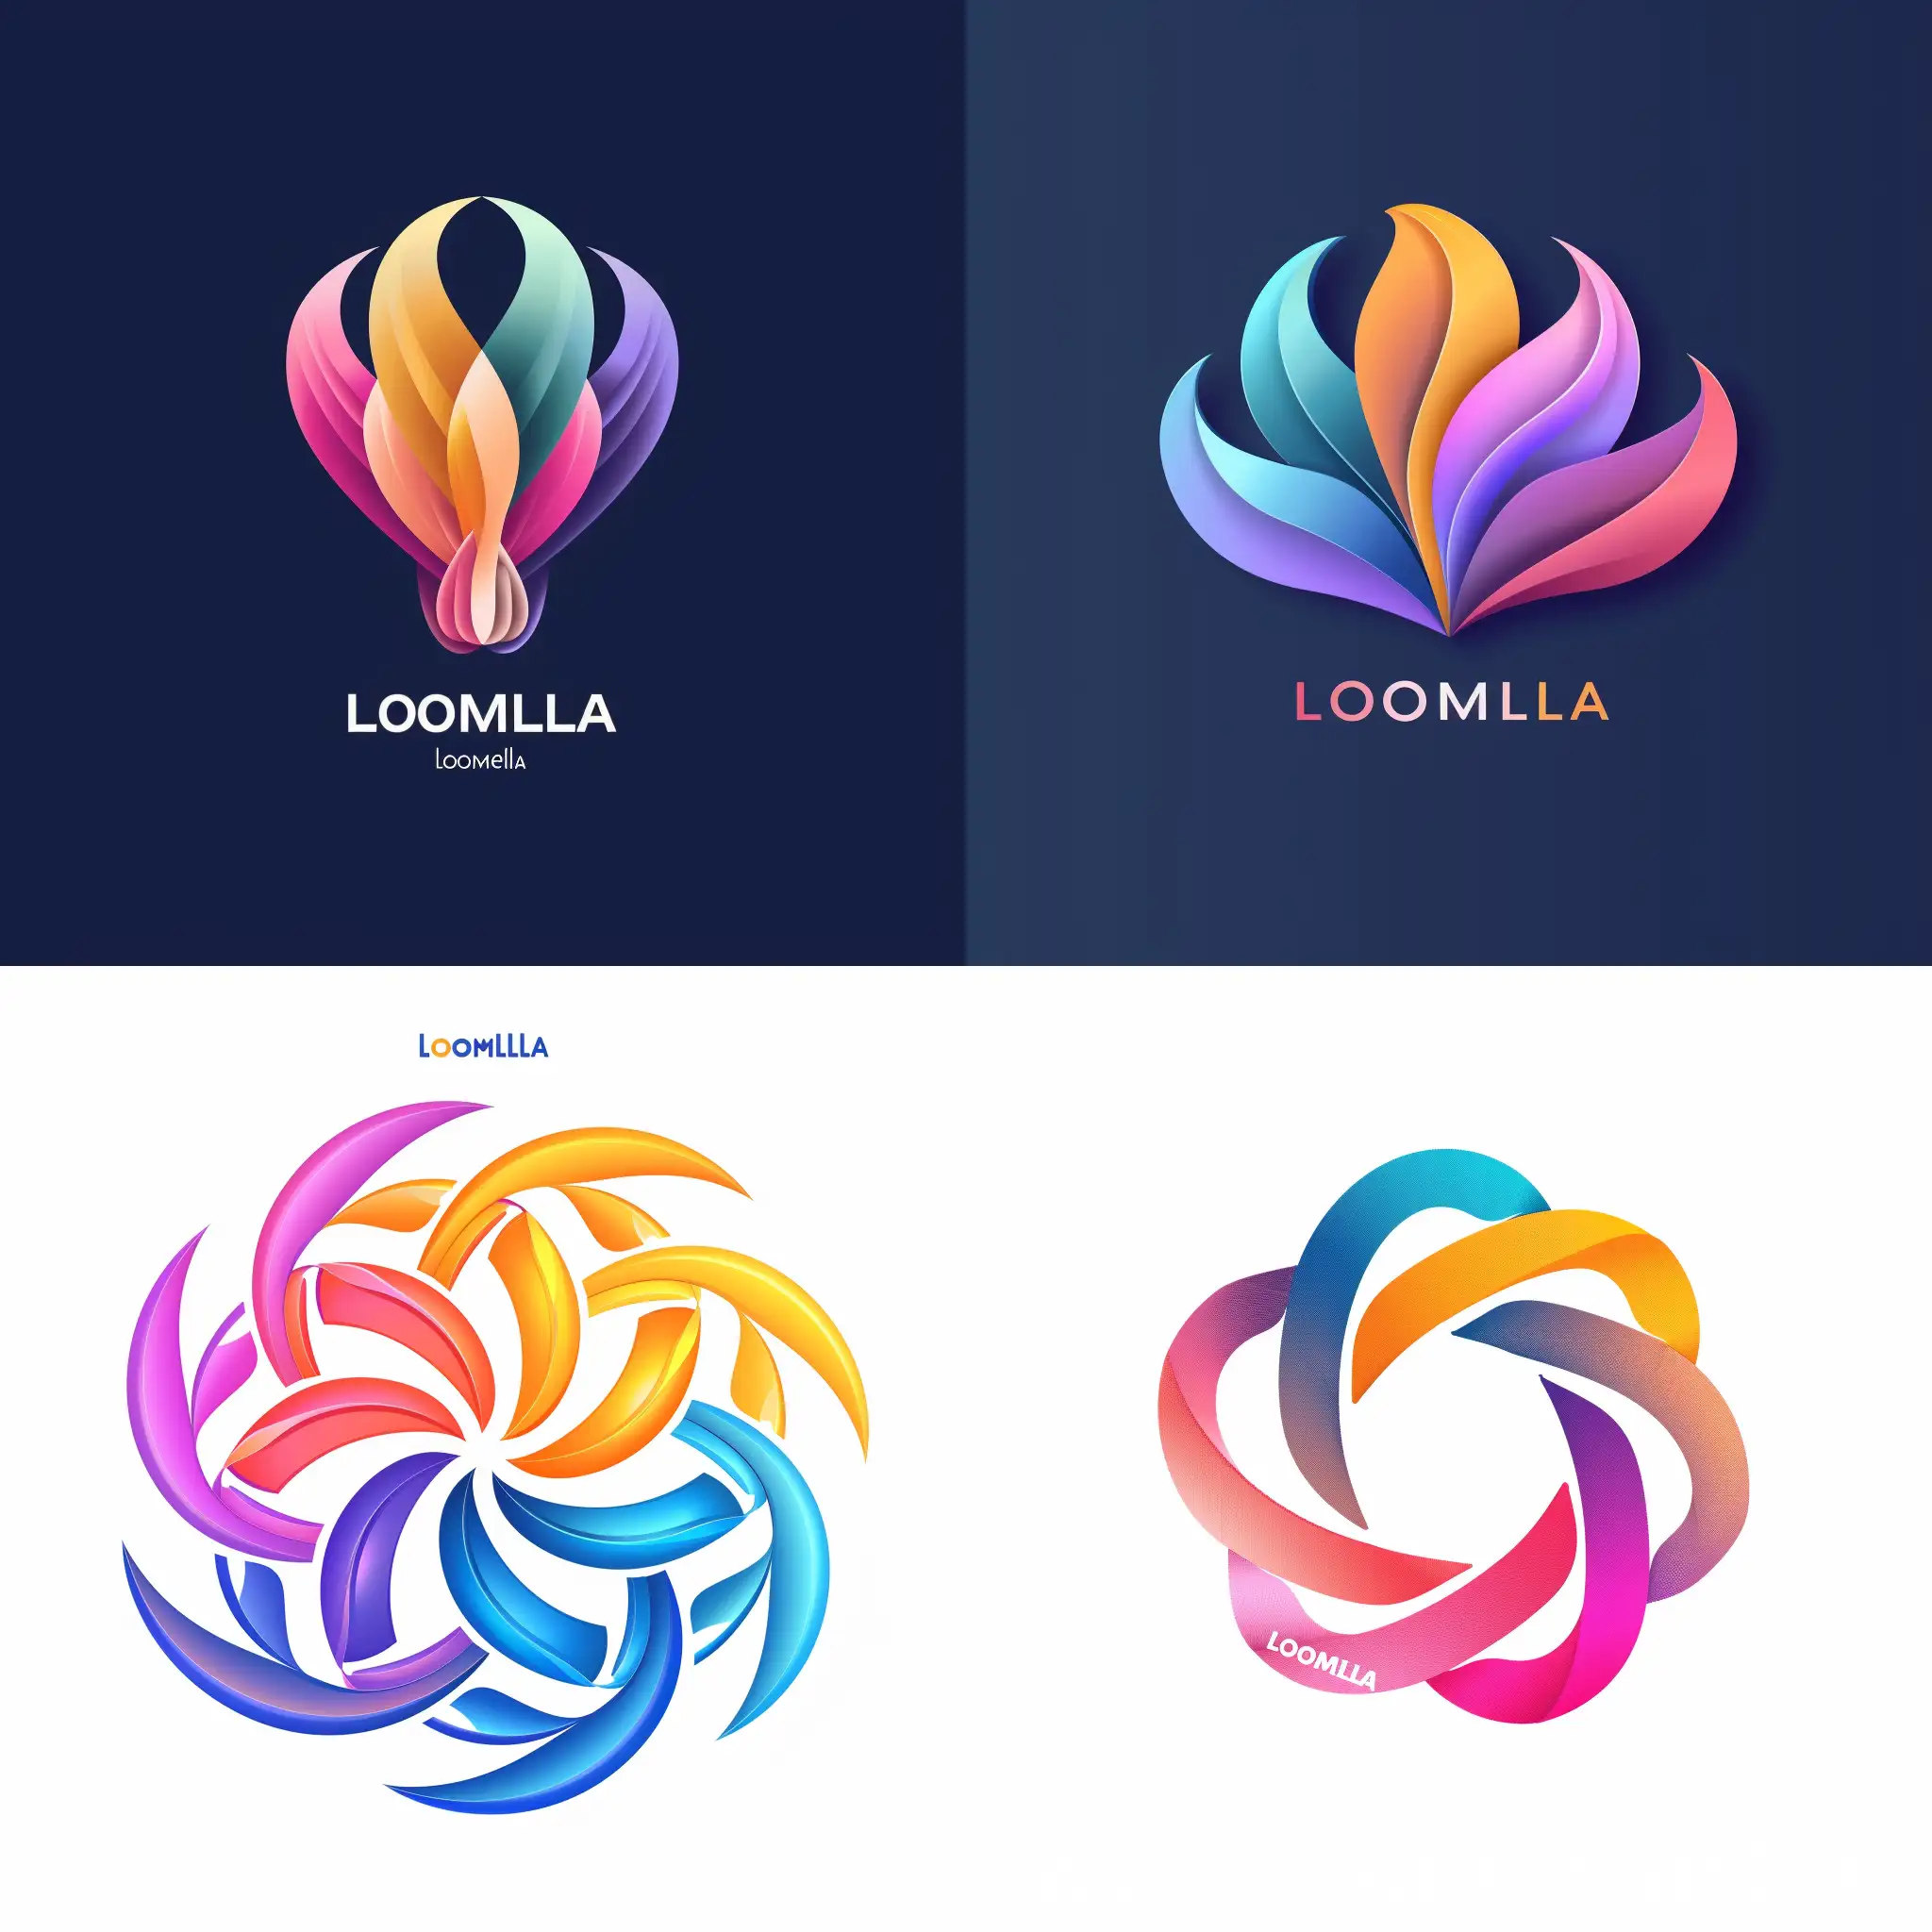 LOOMELLA logo design represents fabric and knitting، 